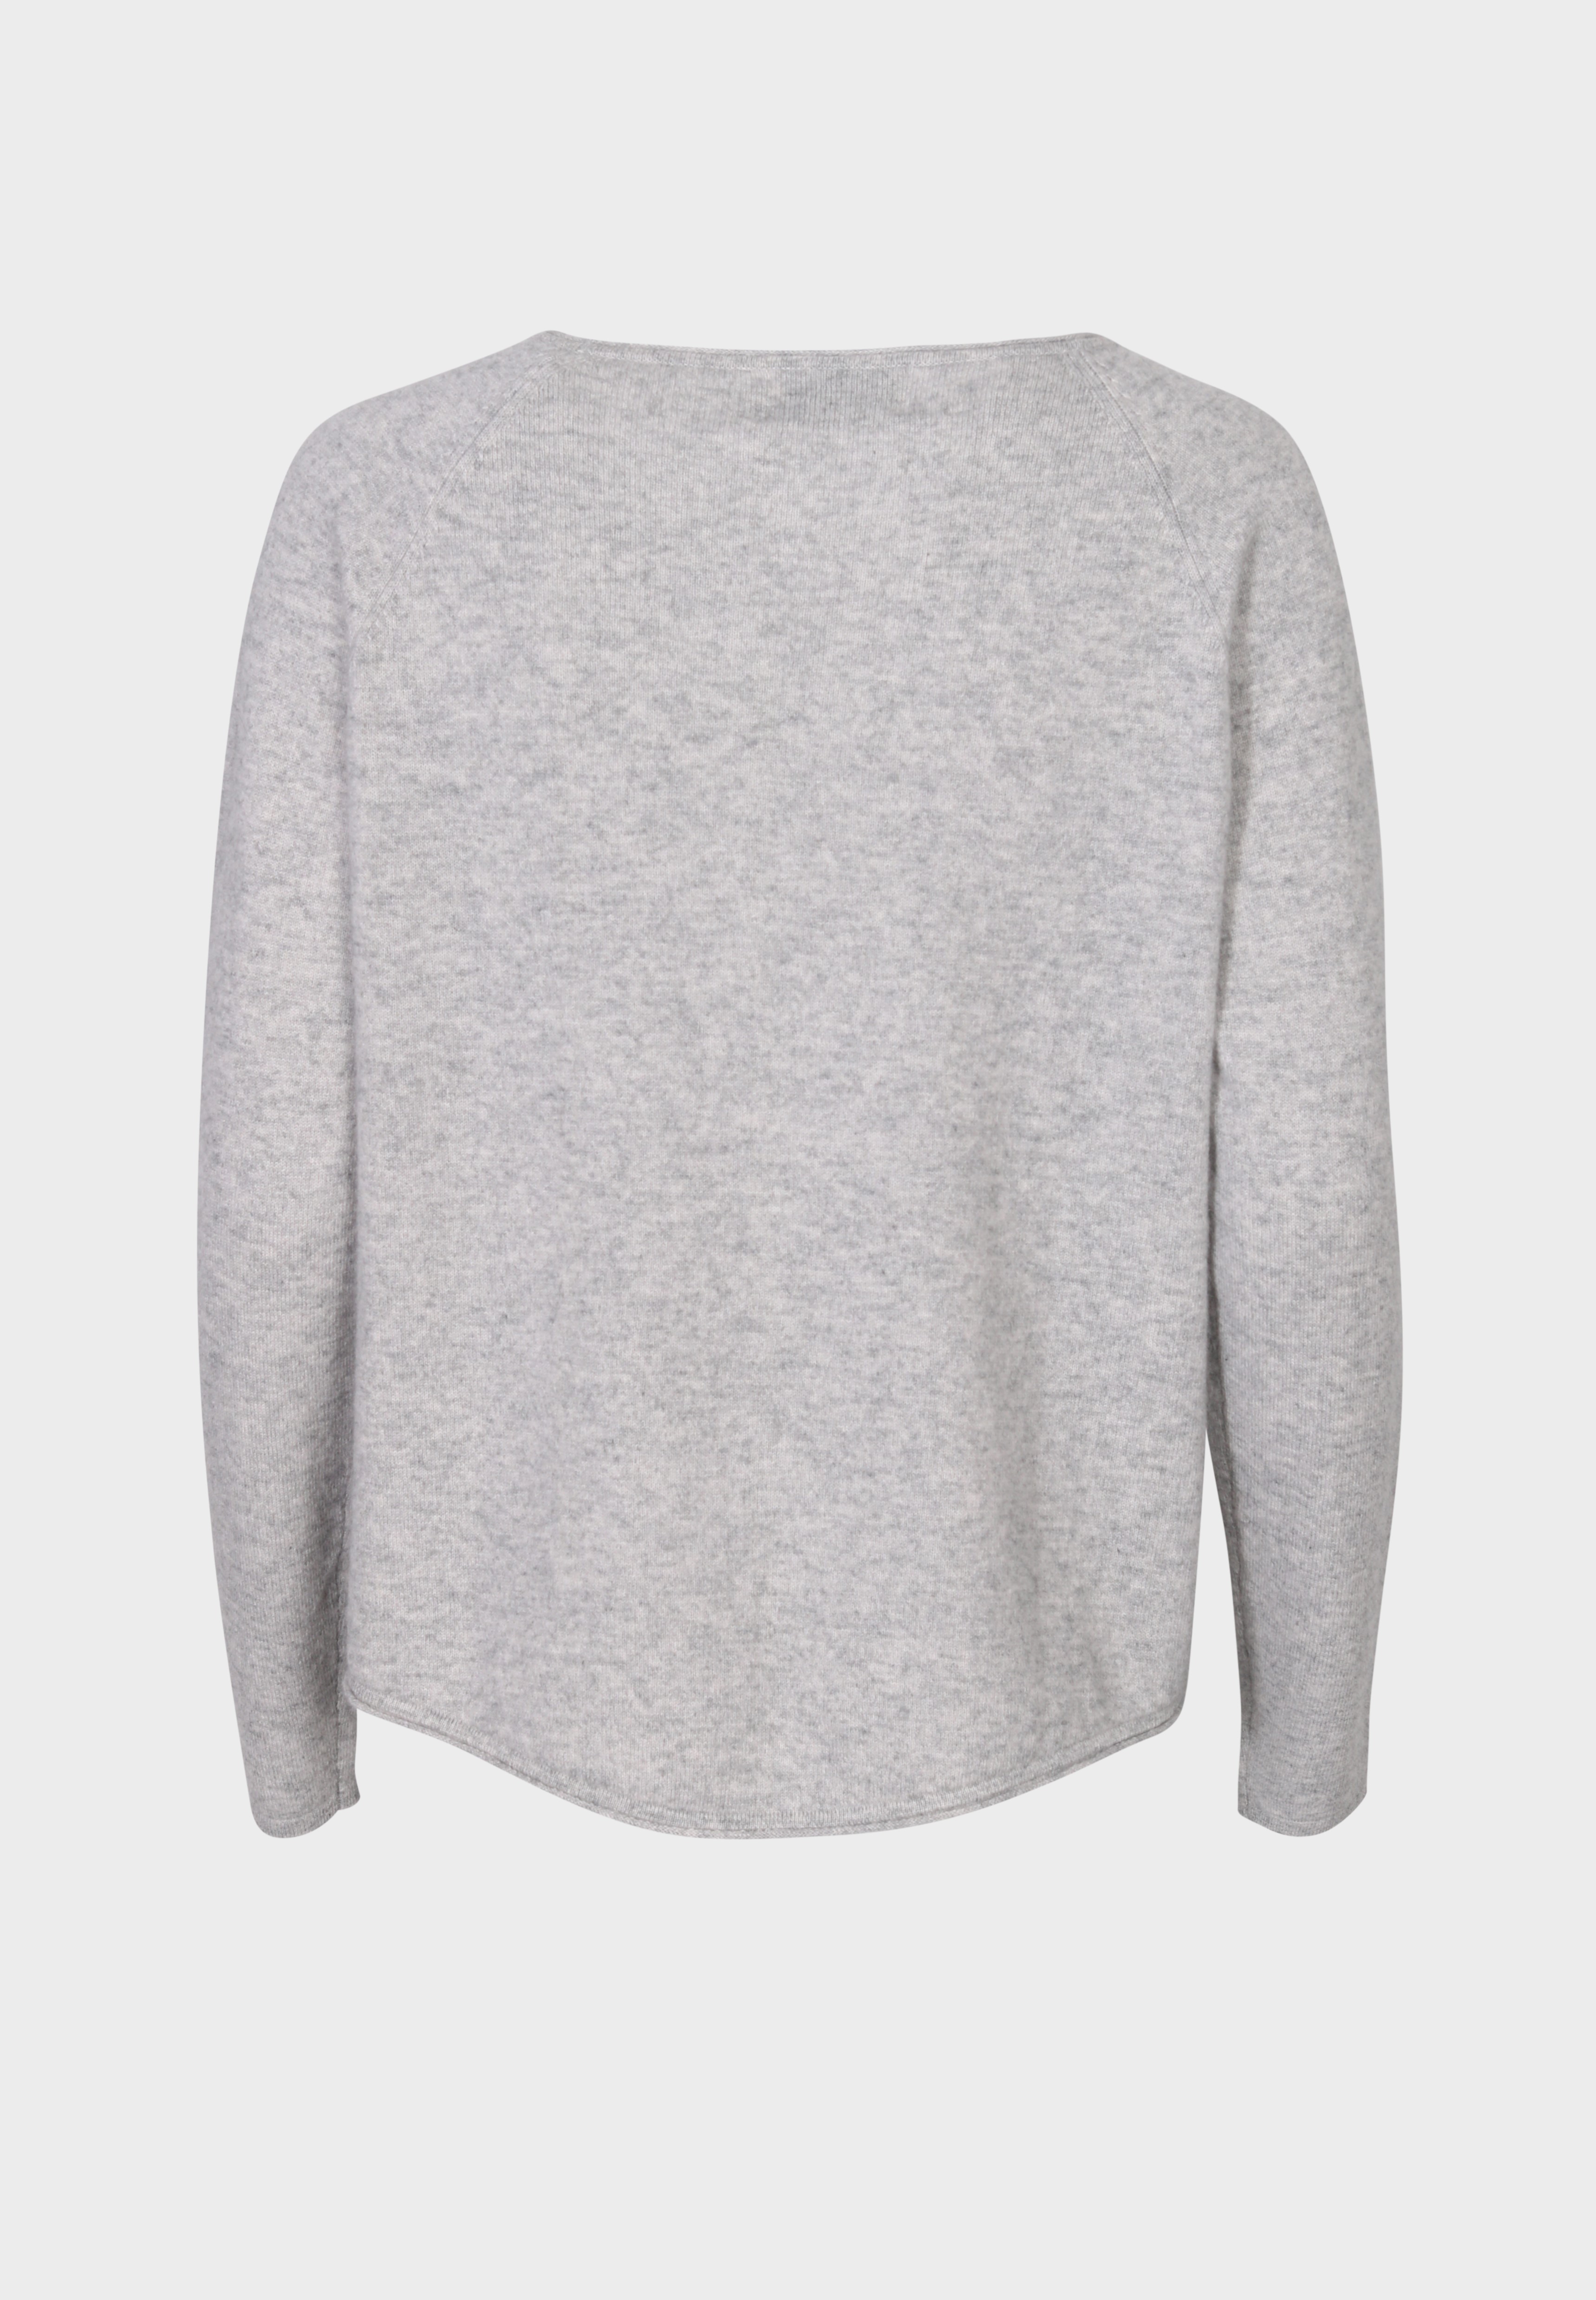 FLONA Cashmere Sweater in Greige XS